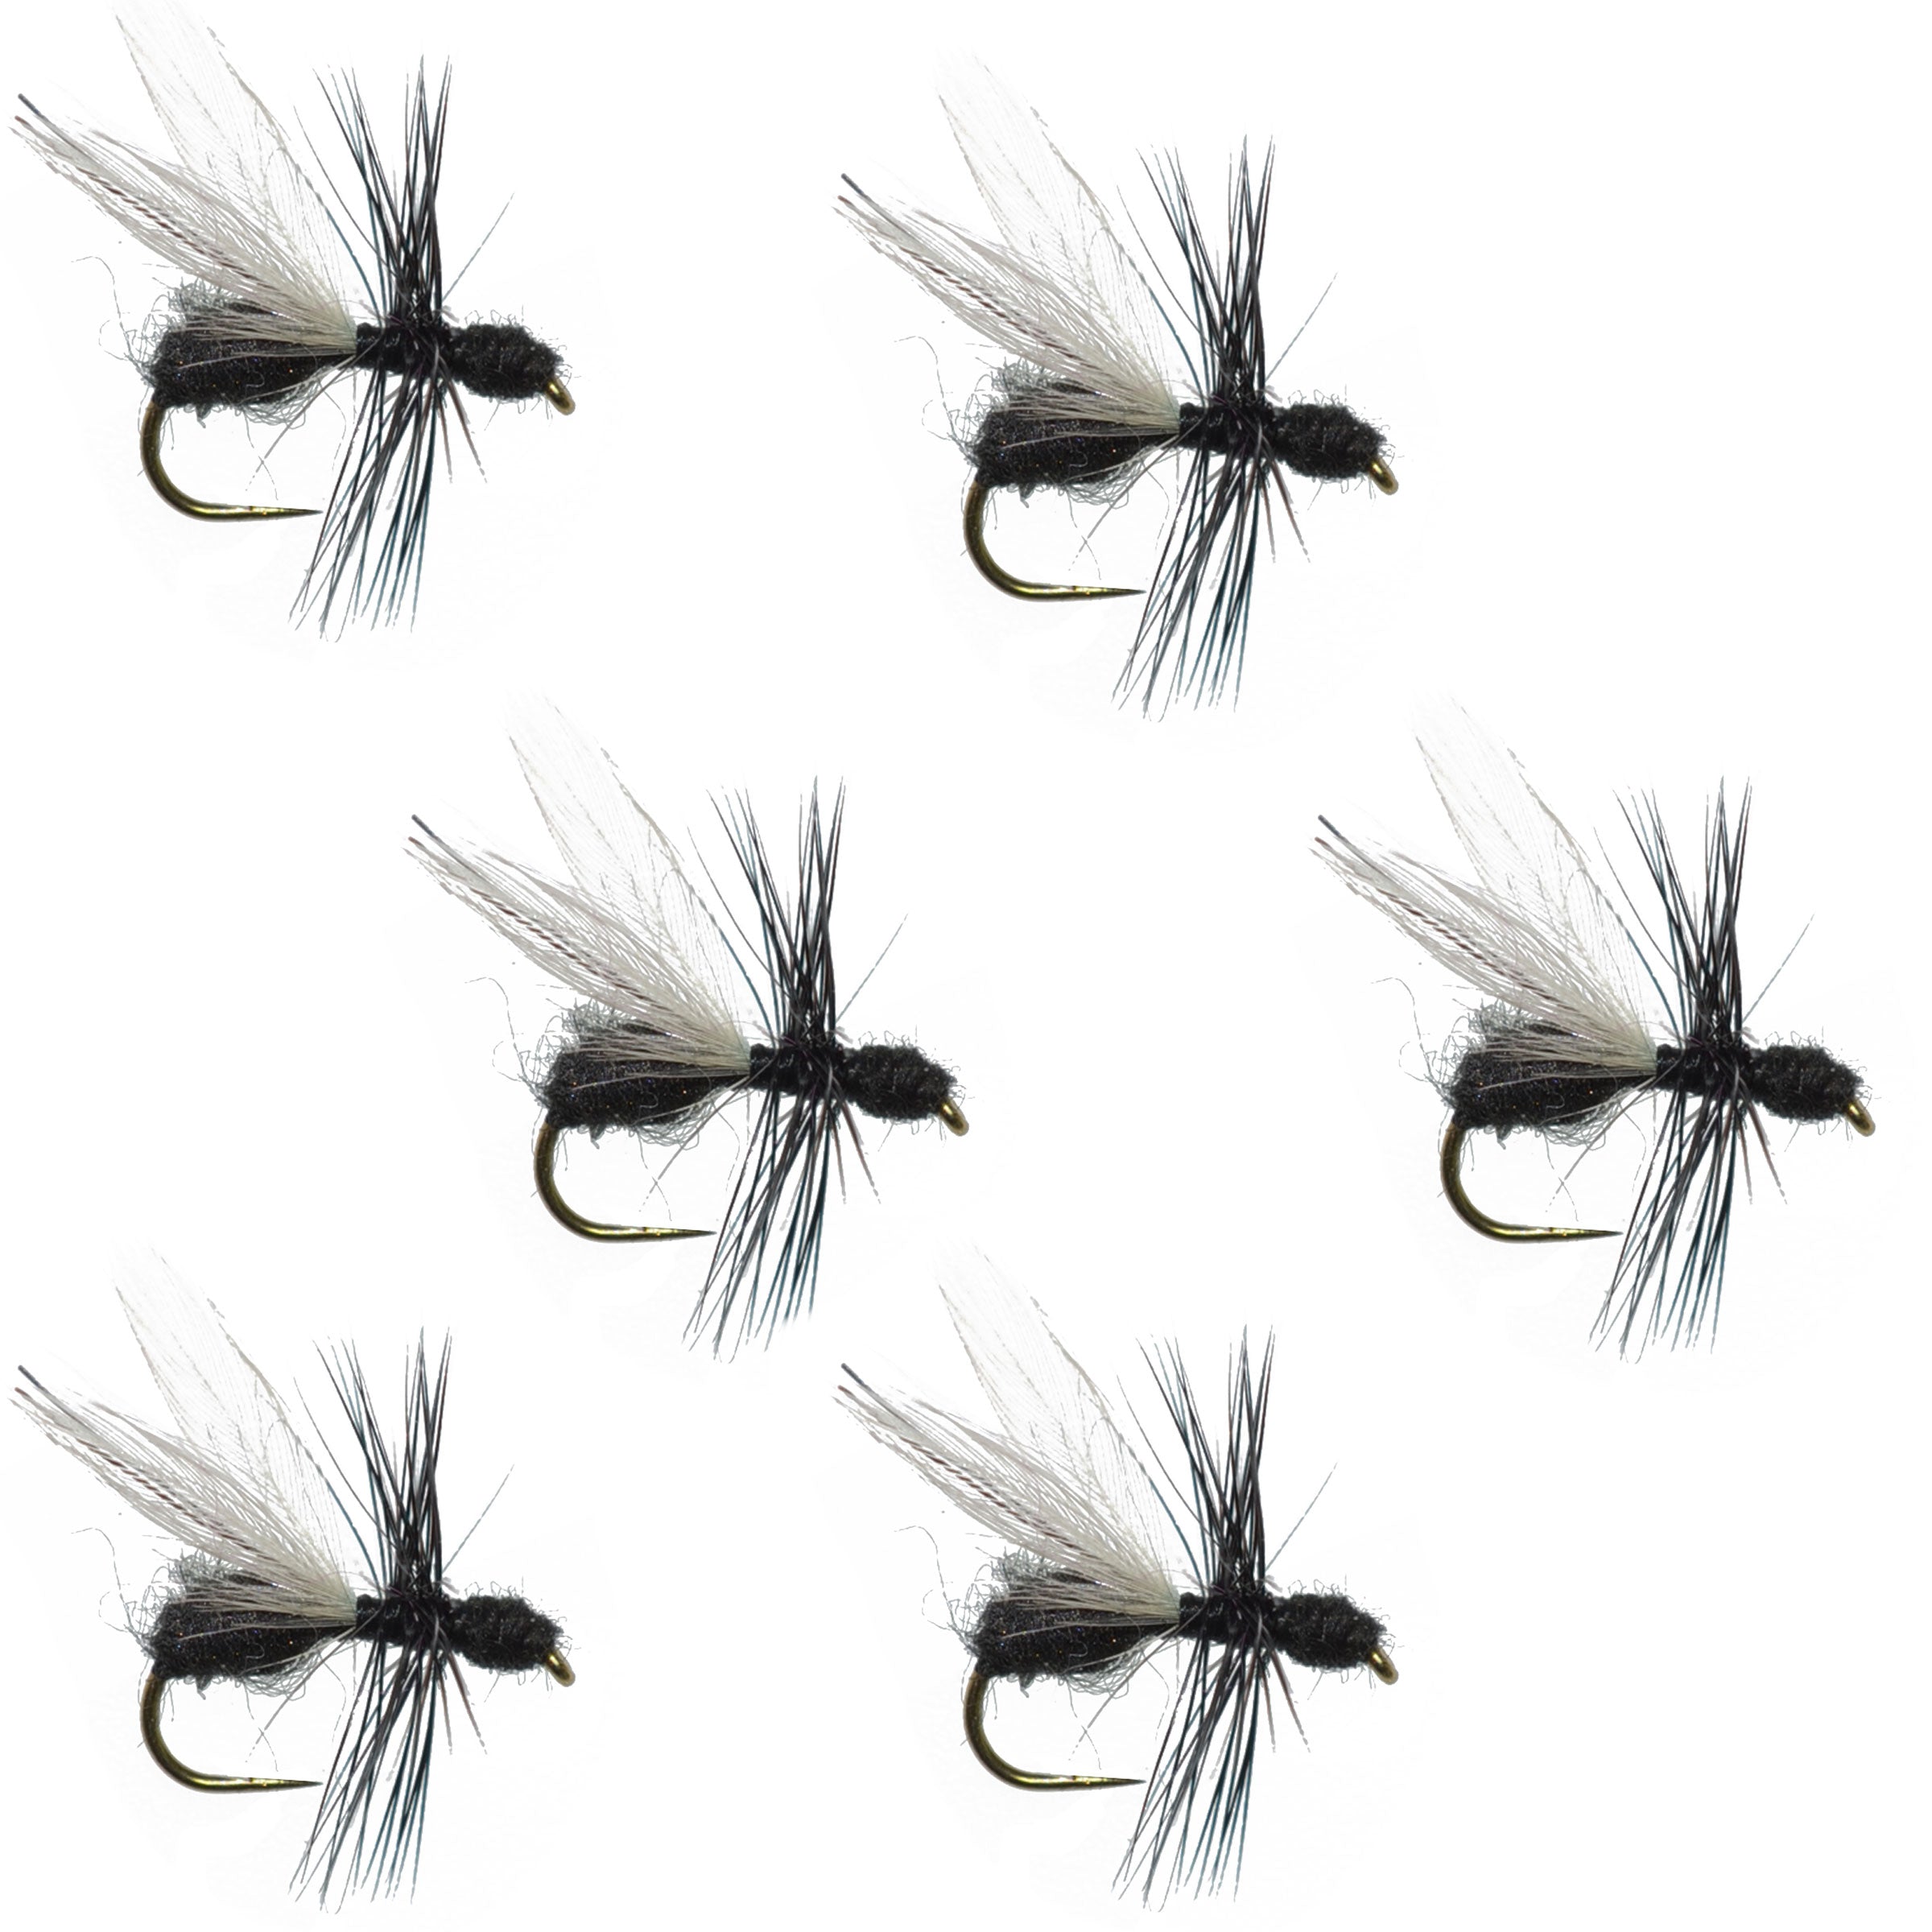 Barbless Black Fur Flying Ant Terrestrial Trout Dry Fly Fishing Flies - 6 Flies Hook Size 14